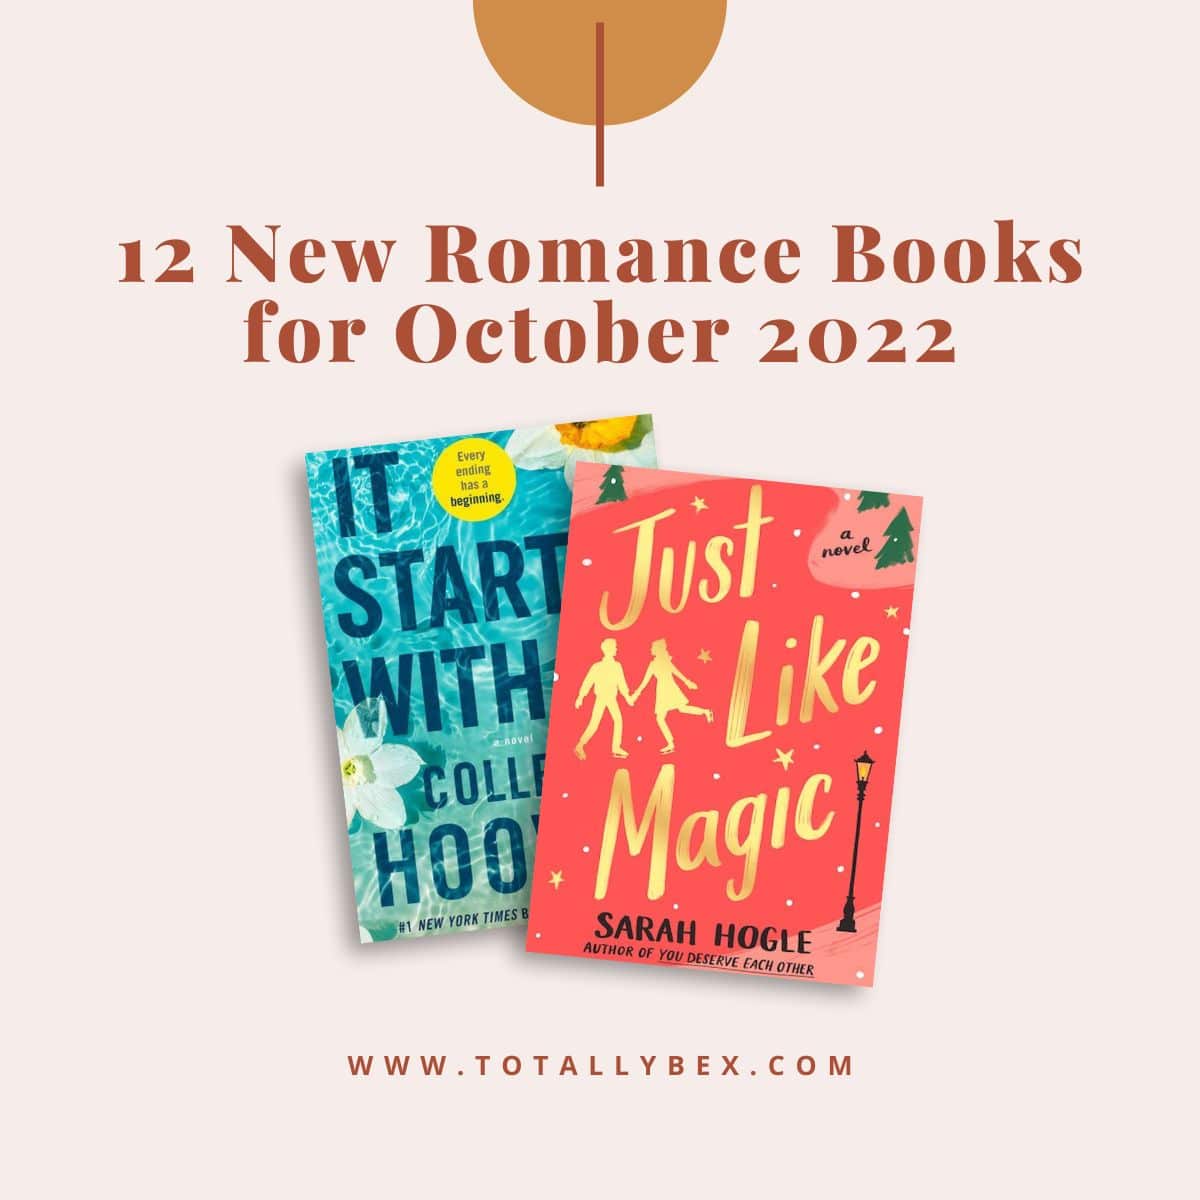 12 New Romance Books for October 2022